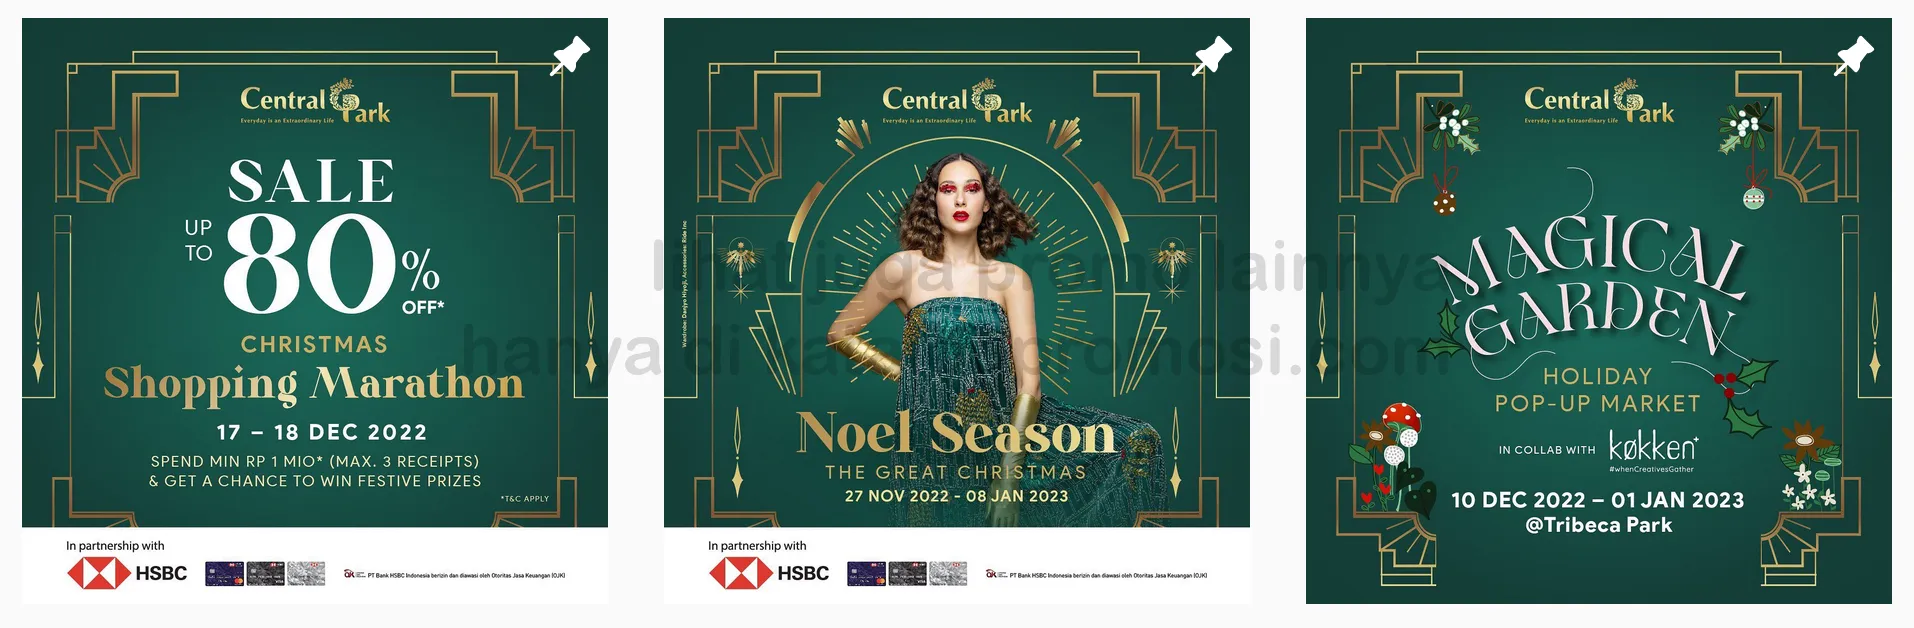 Promo CENTRAL PARK NOEL SEASON “THE GREAT CHRISTMAS”